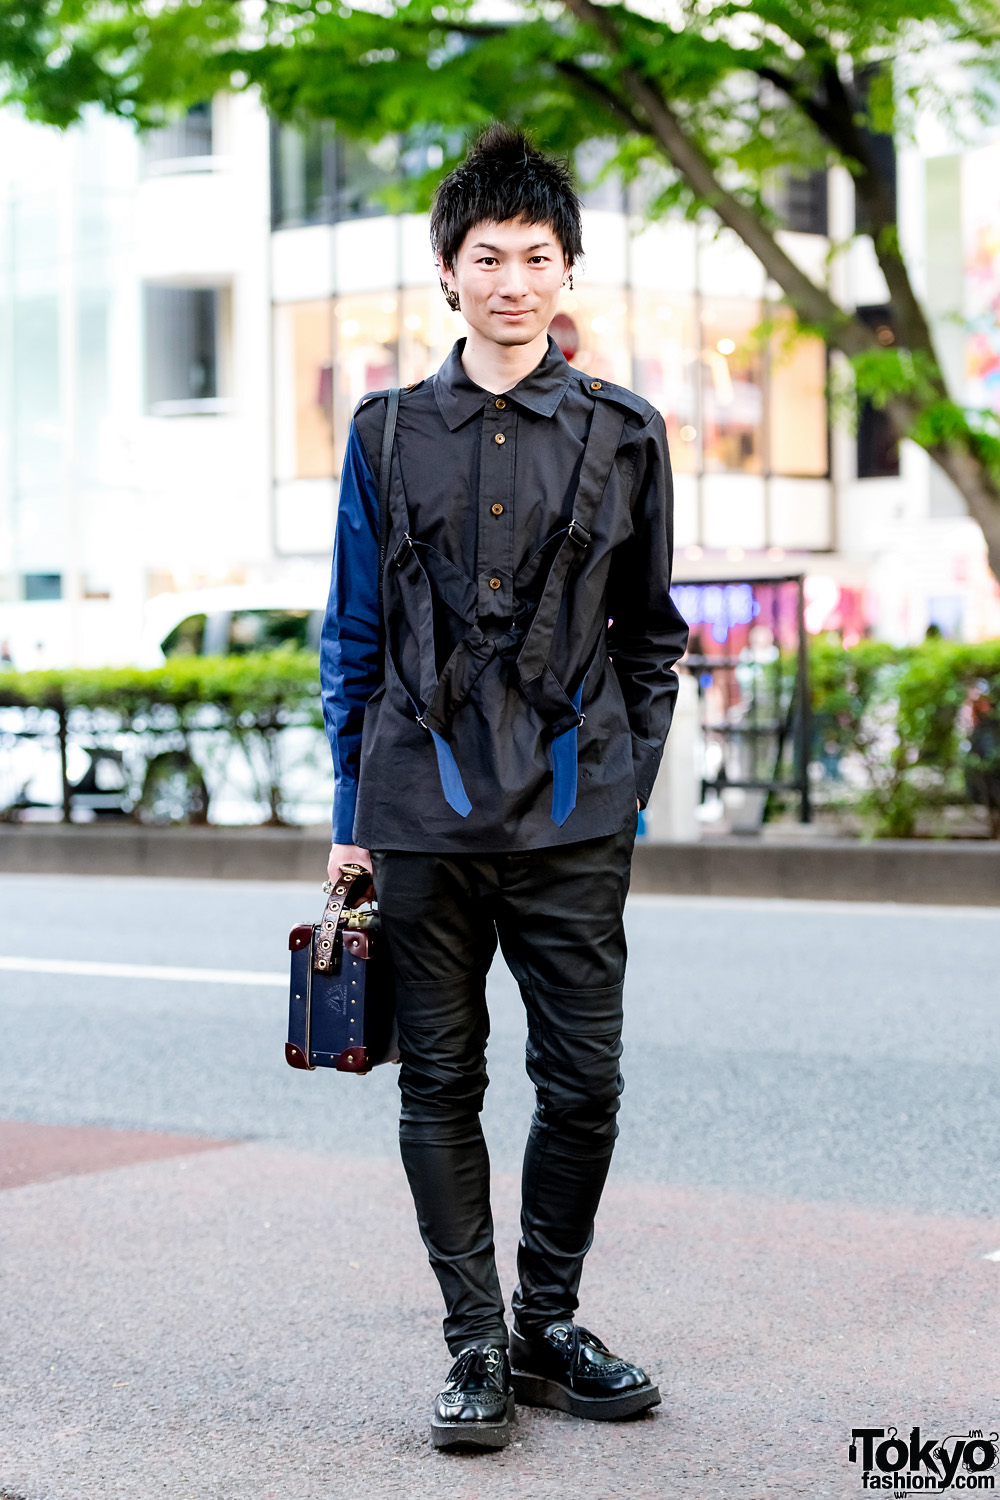 Black Harajuku Street Style w/ Vivienne Westwood Harness Strap